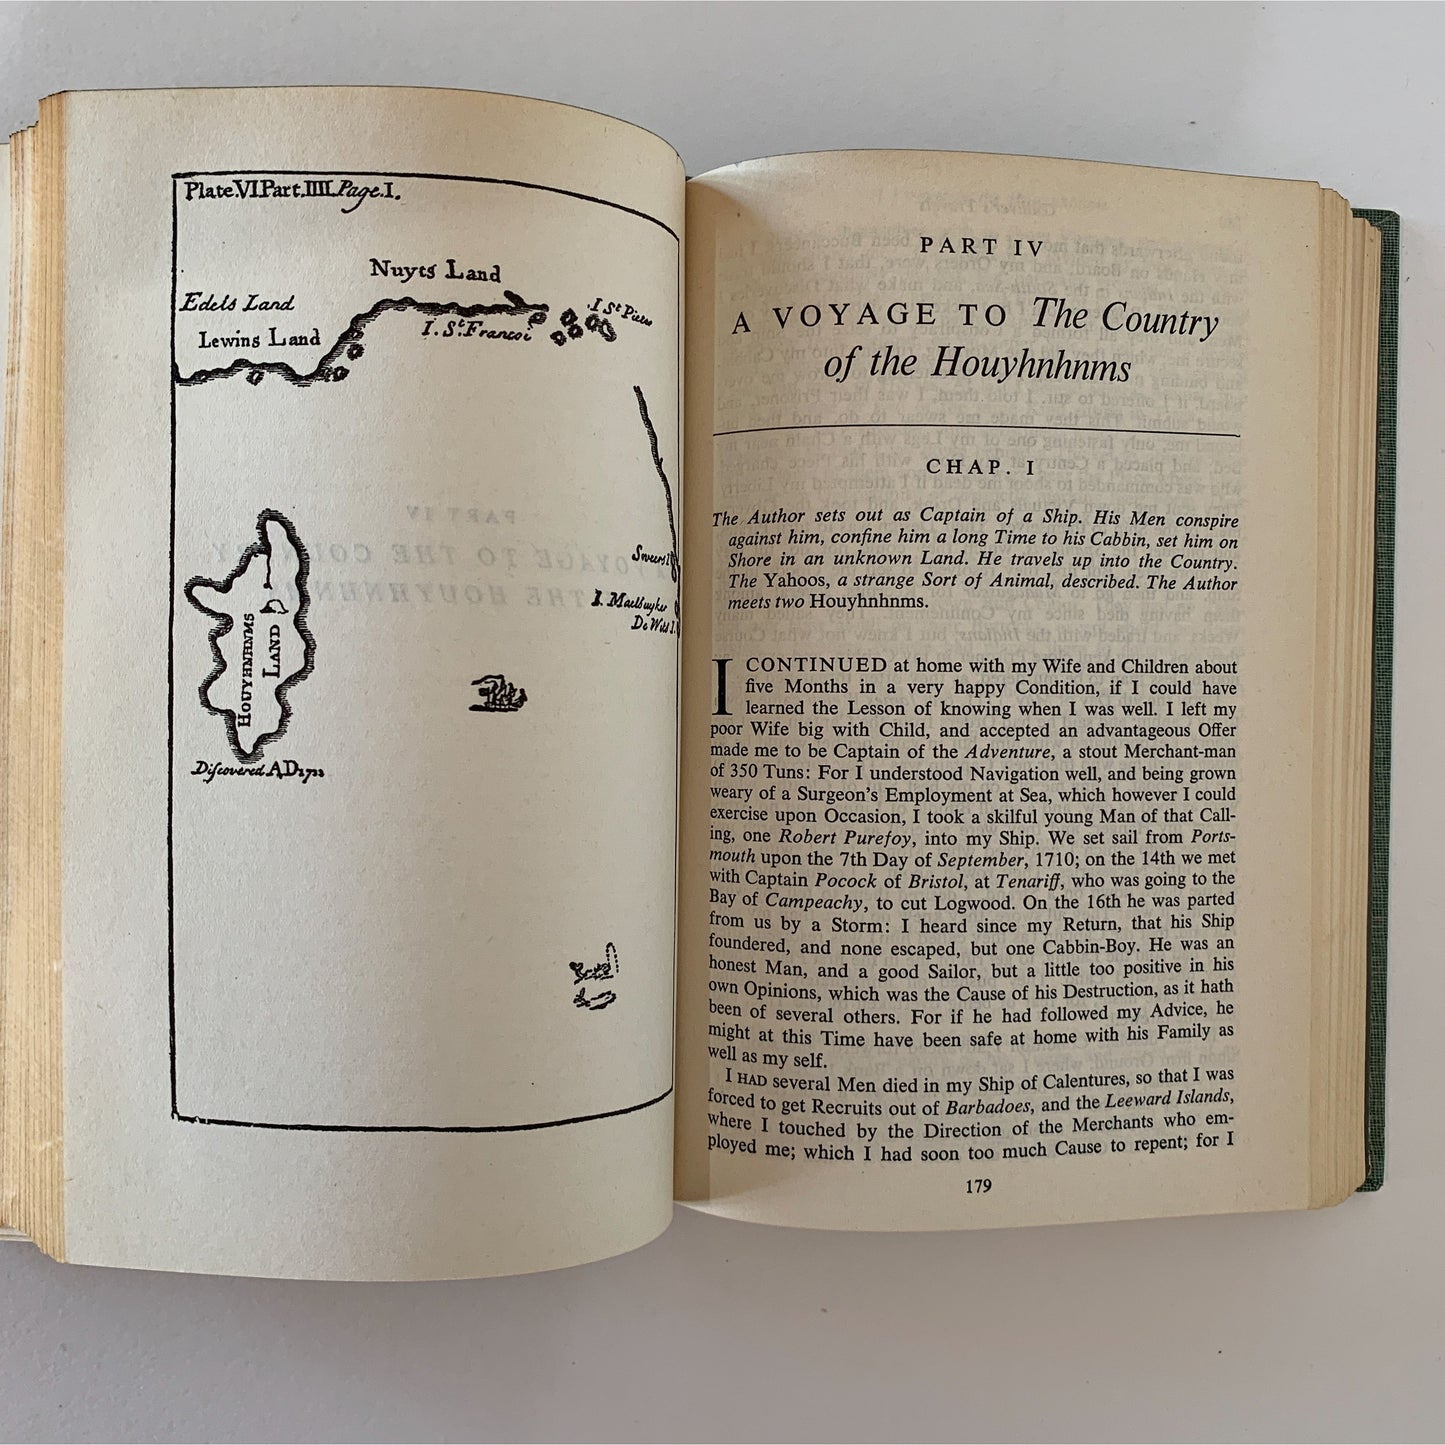 Gulliver's Travels, Jonathan Swift, Modern Library DJ, 1958